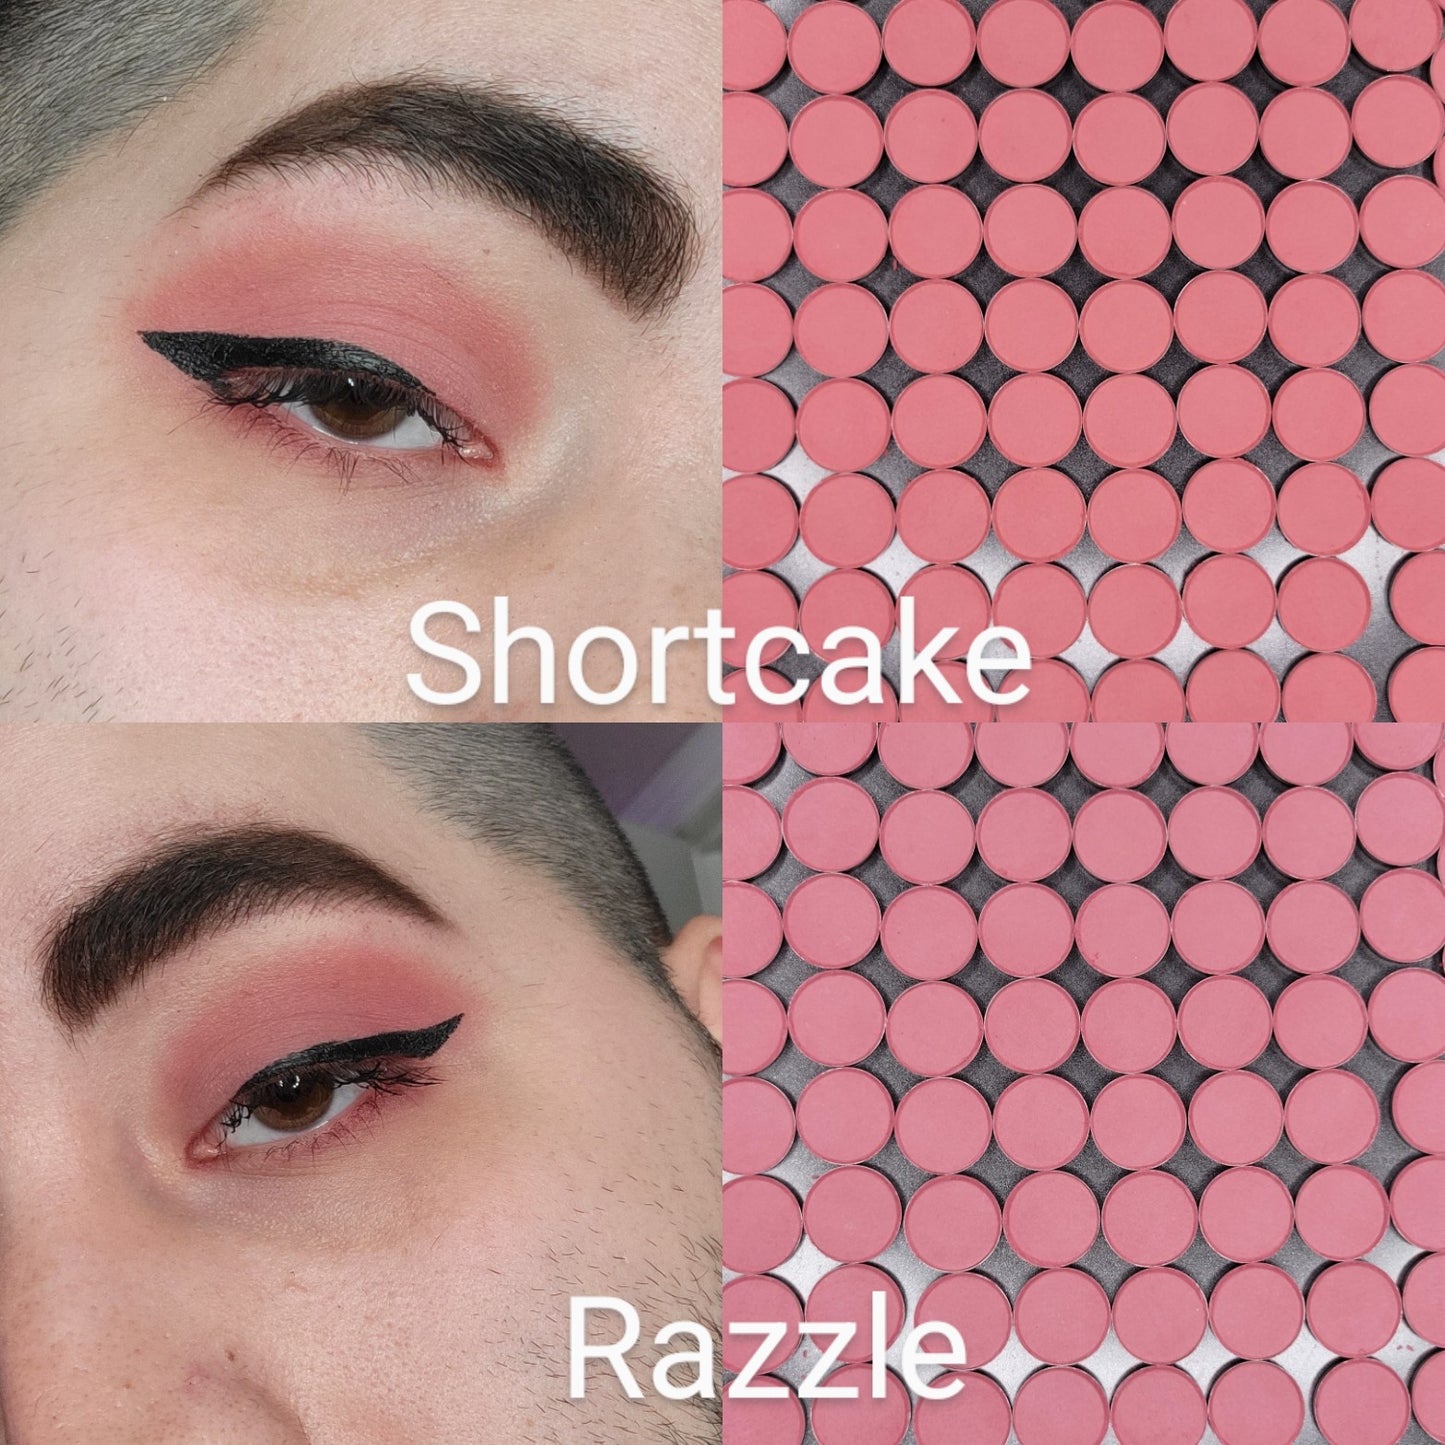 Razzle - Eyeshadow Matte Muted Berry Pink